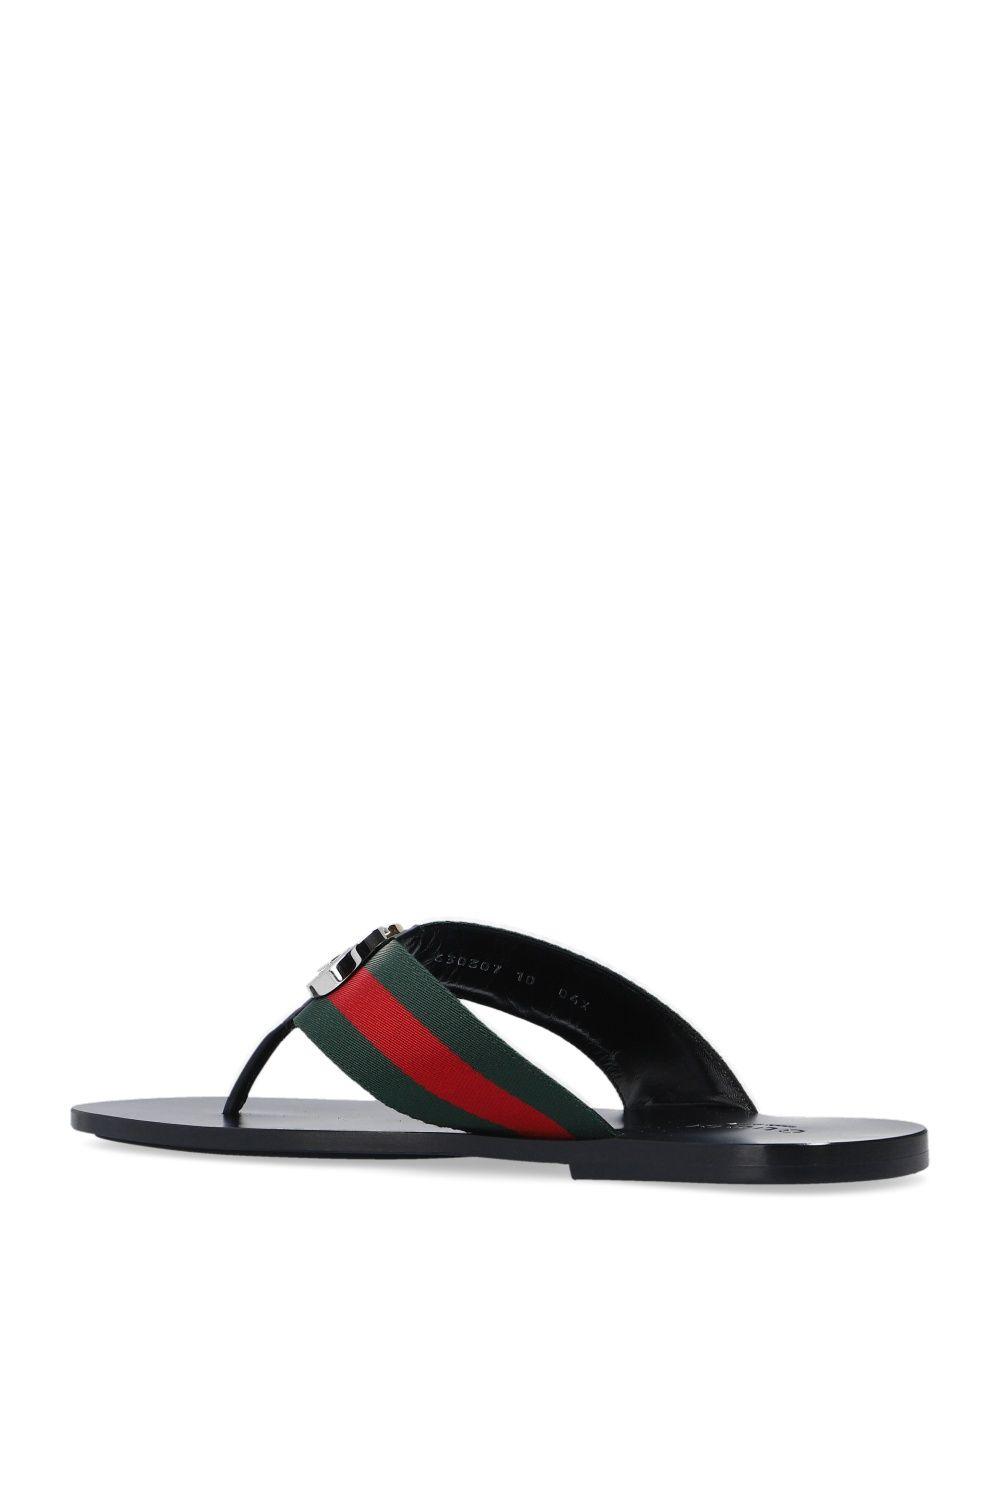 Gucci Men's Web Slide Sandals - Black - Size 11